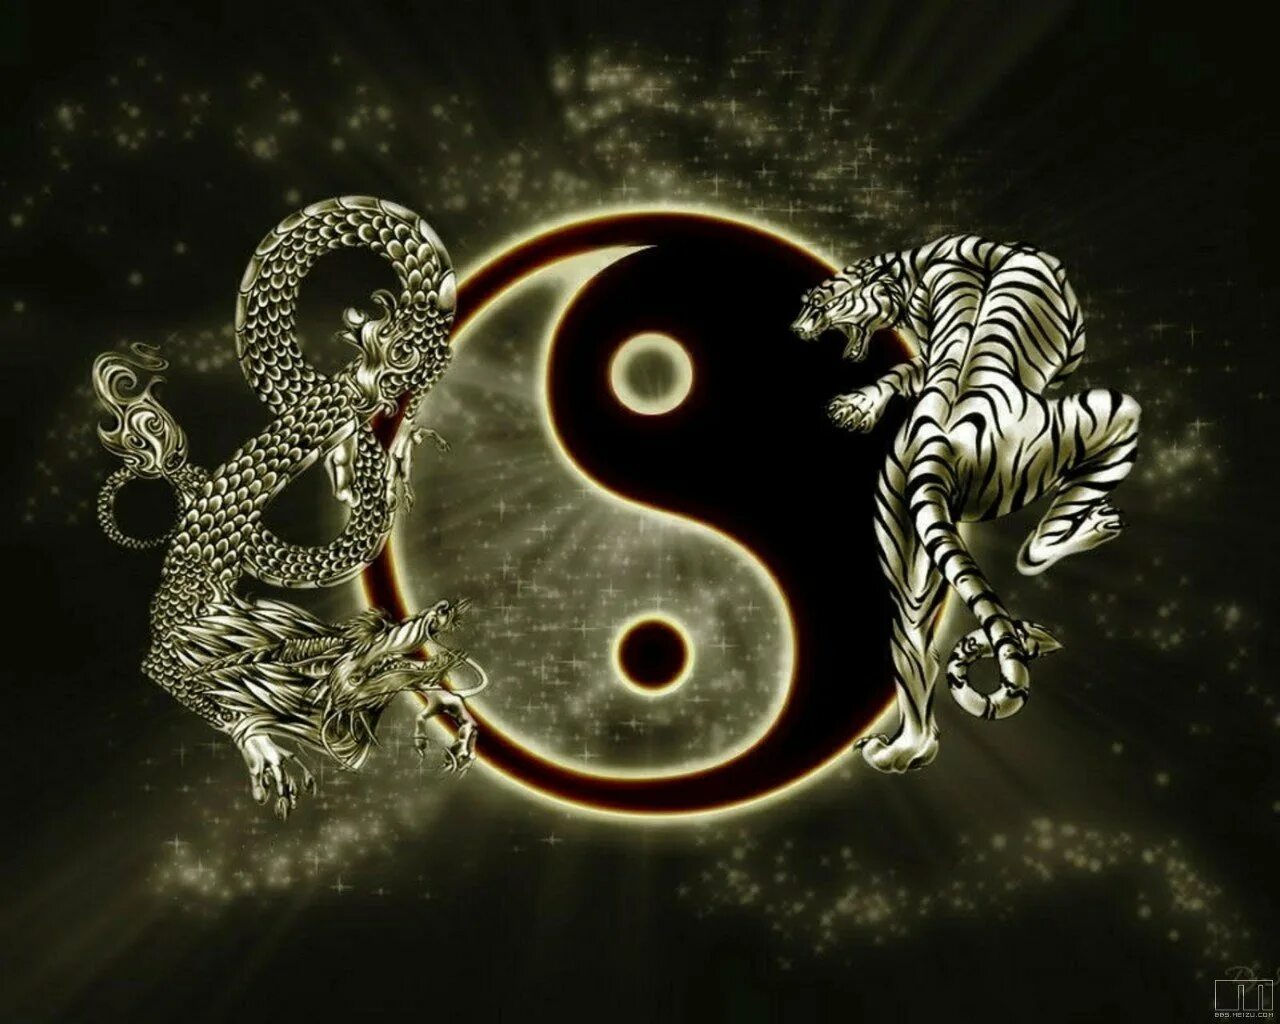 Дракон знака зодиака лев. Инь Янь фен шуй. Инь Янь тигр и дракон. Китайский дракон и тигр Инь Янь.